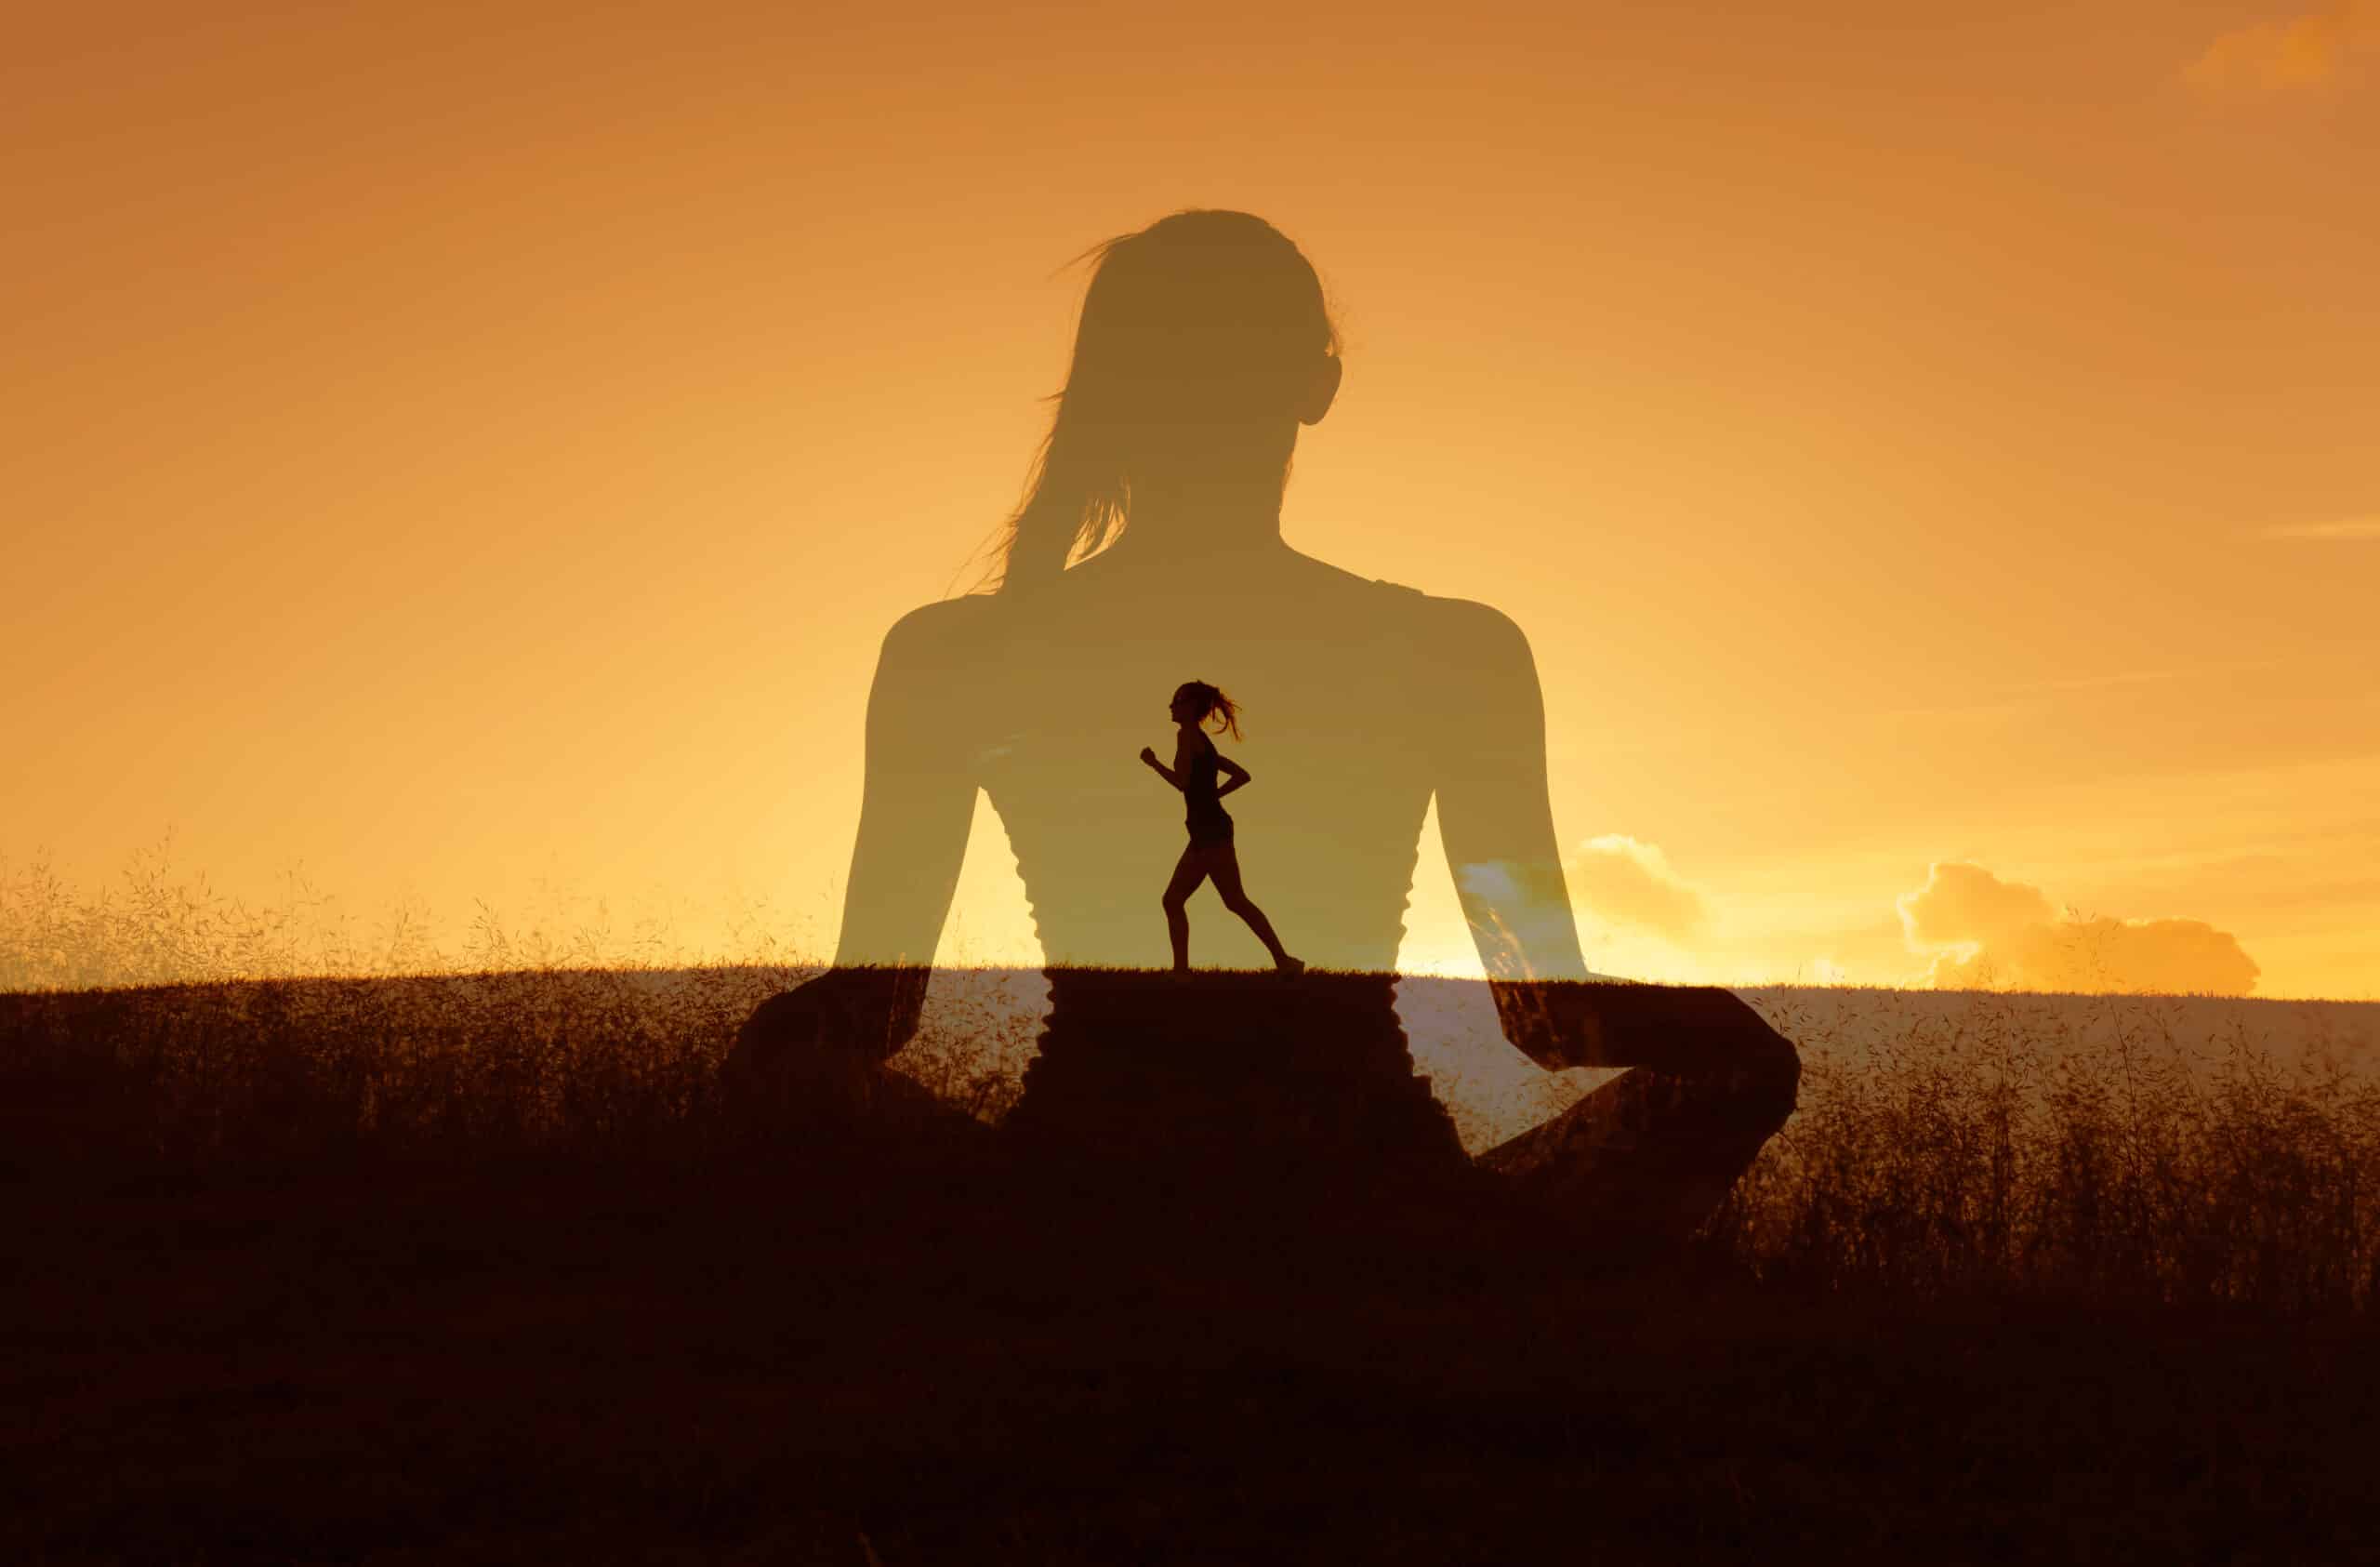 A woman running at sunset